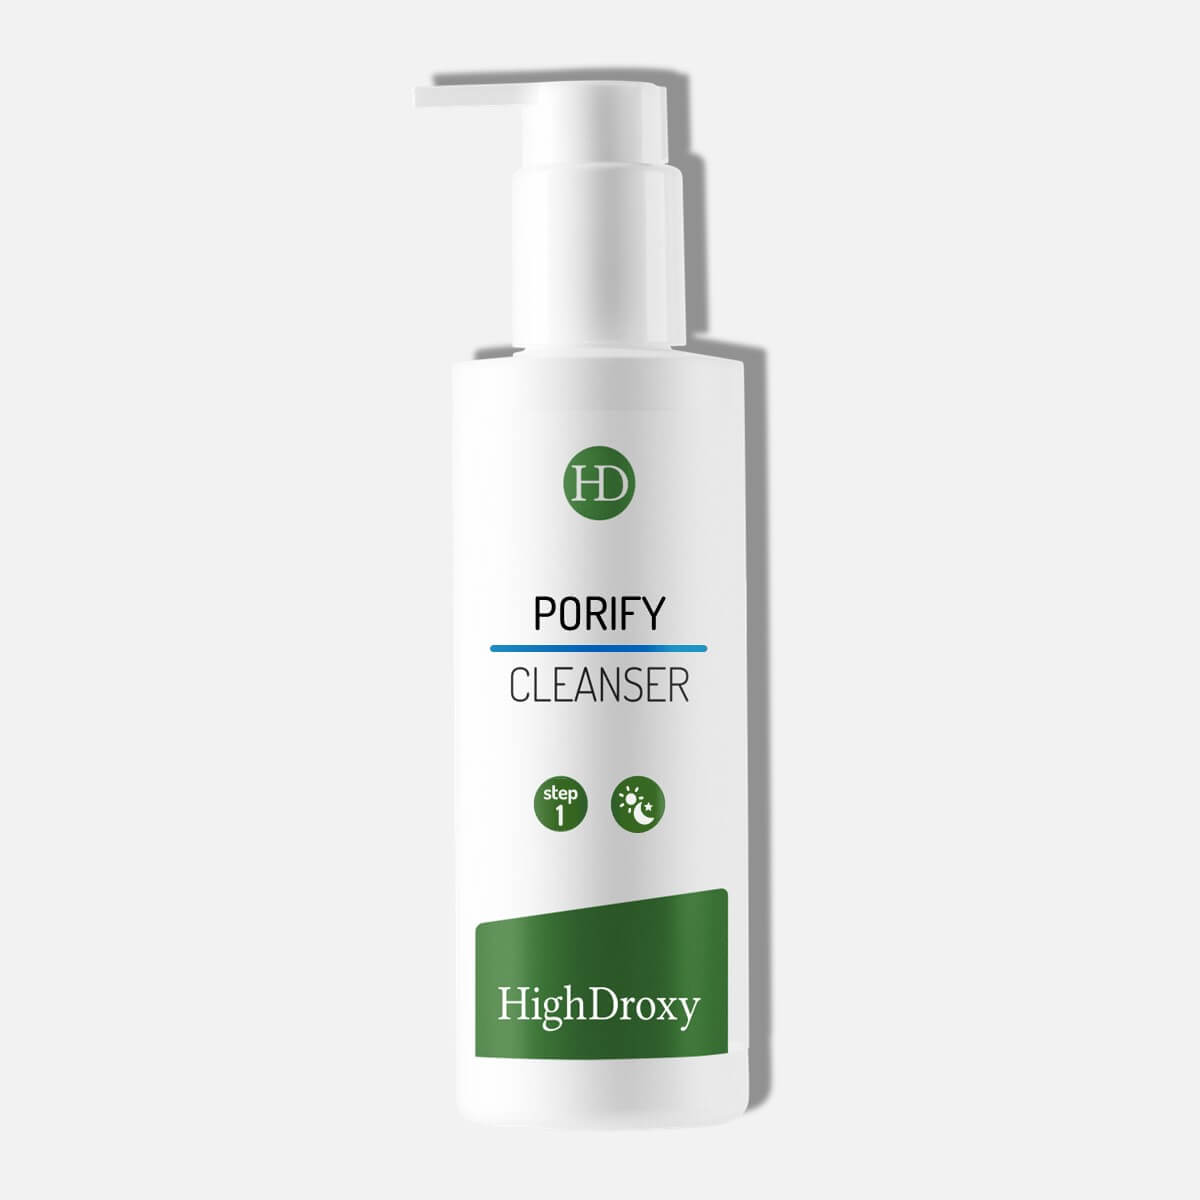 Bottle from HighDroxy Porify Cleanser against light gray background